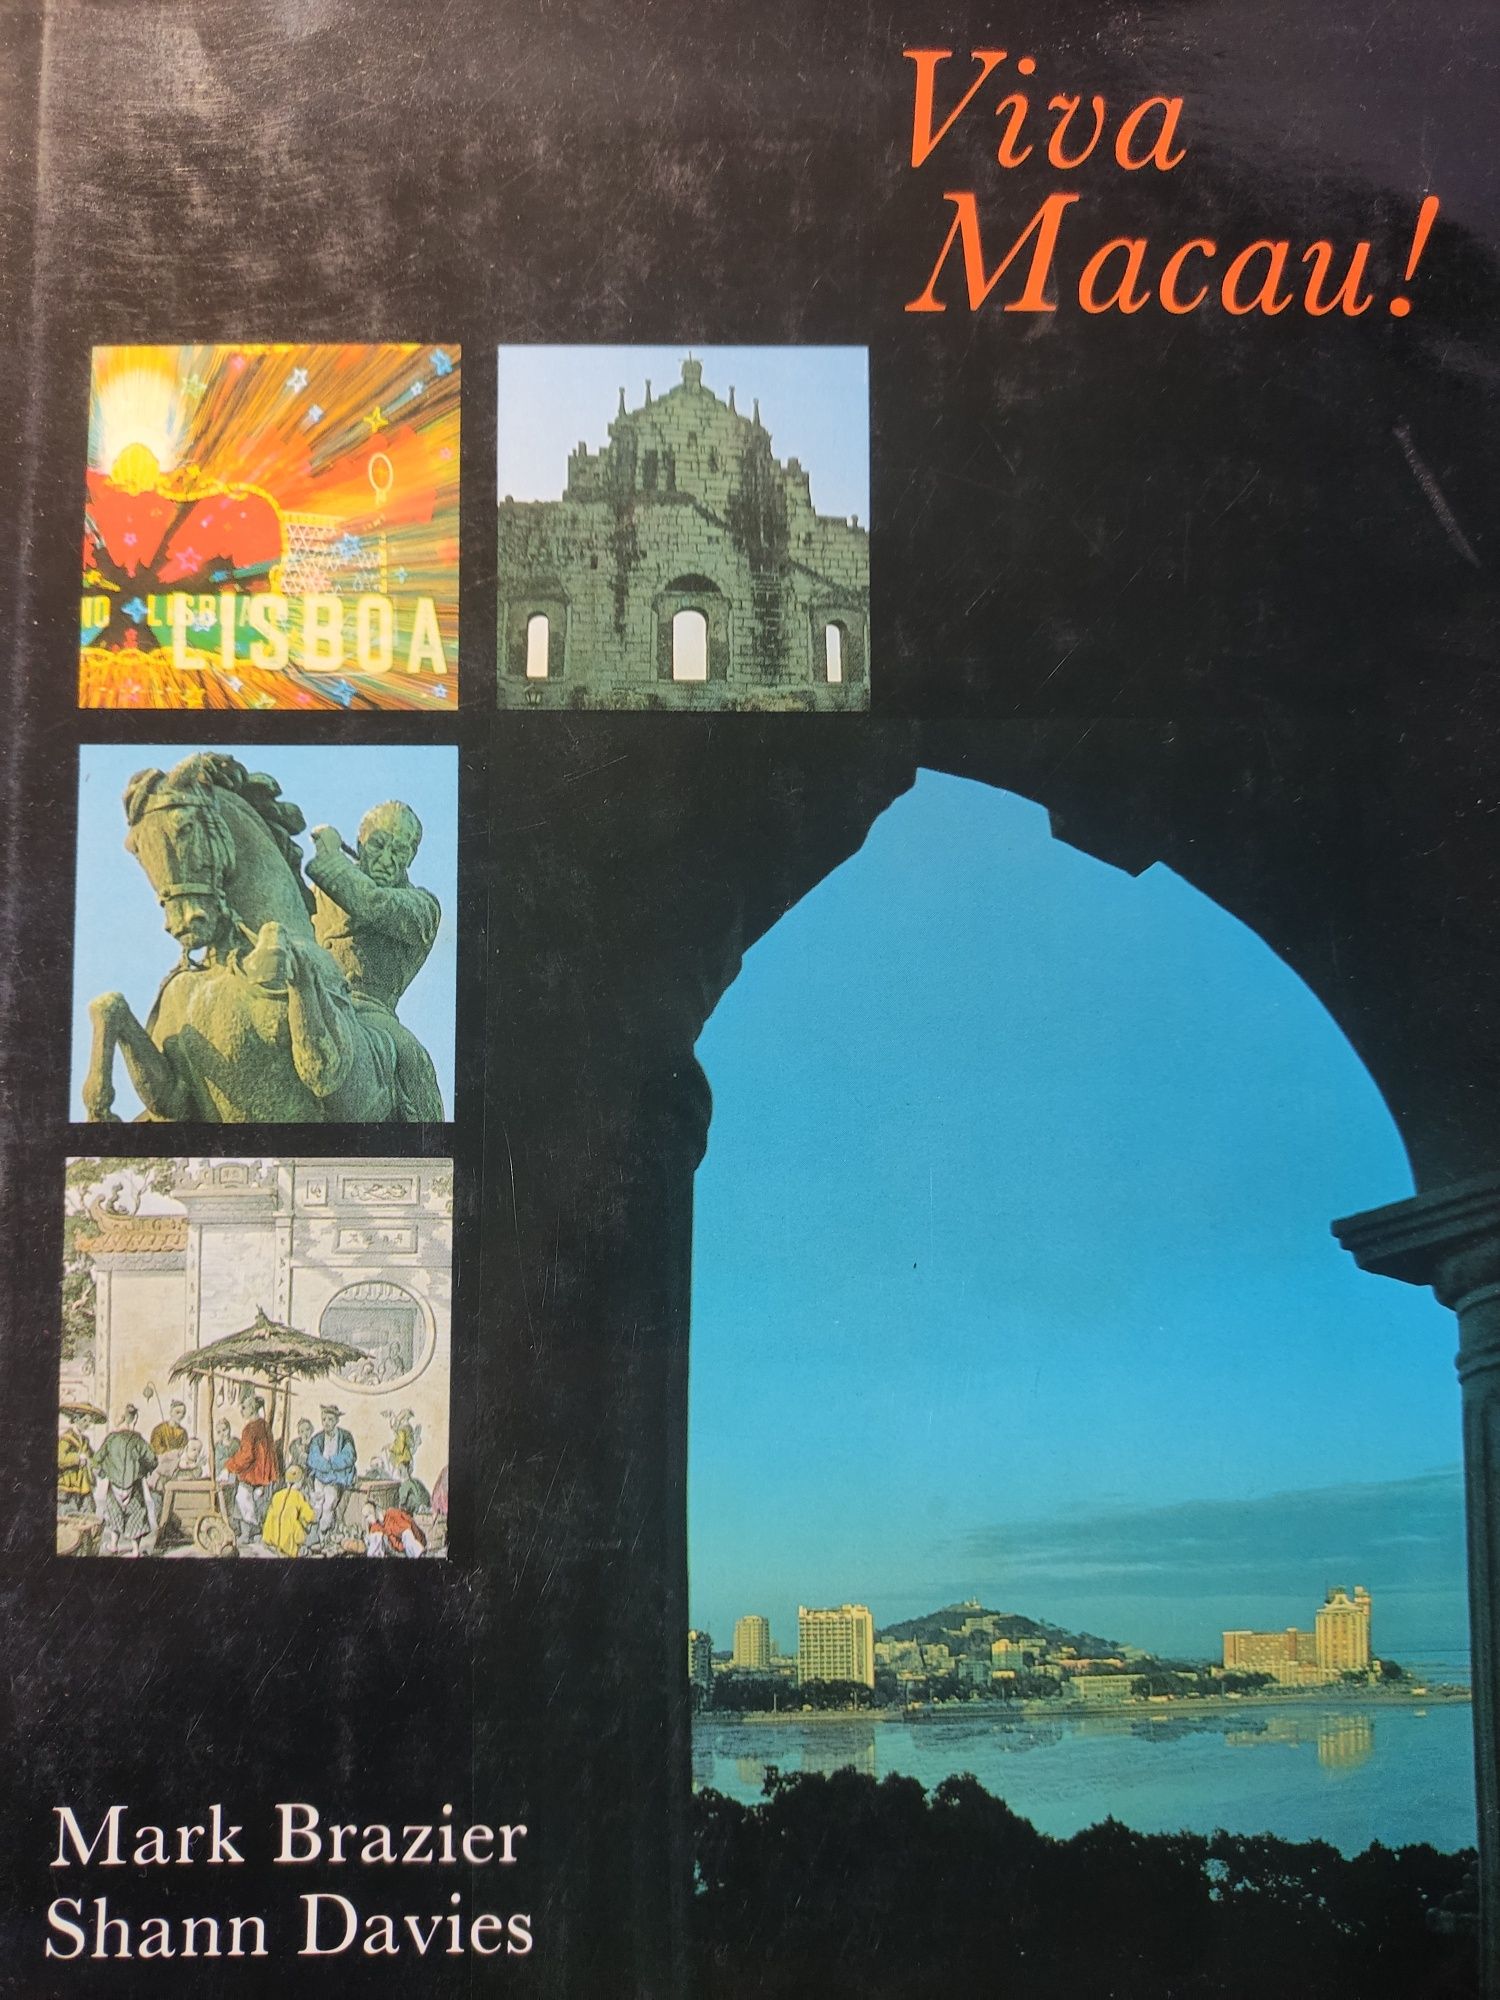 Livro/Book "Viva Macau!"